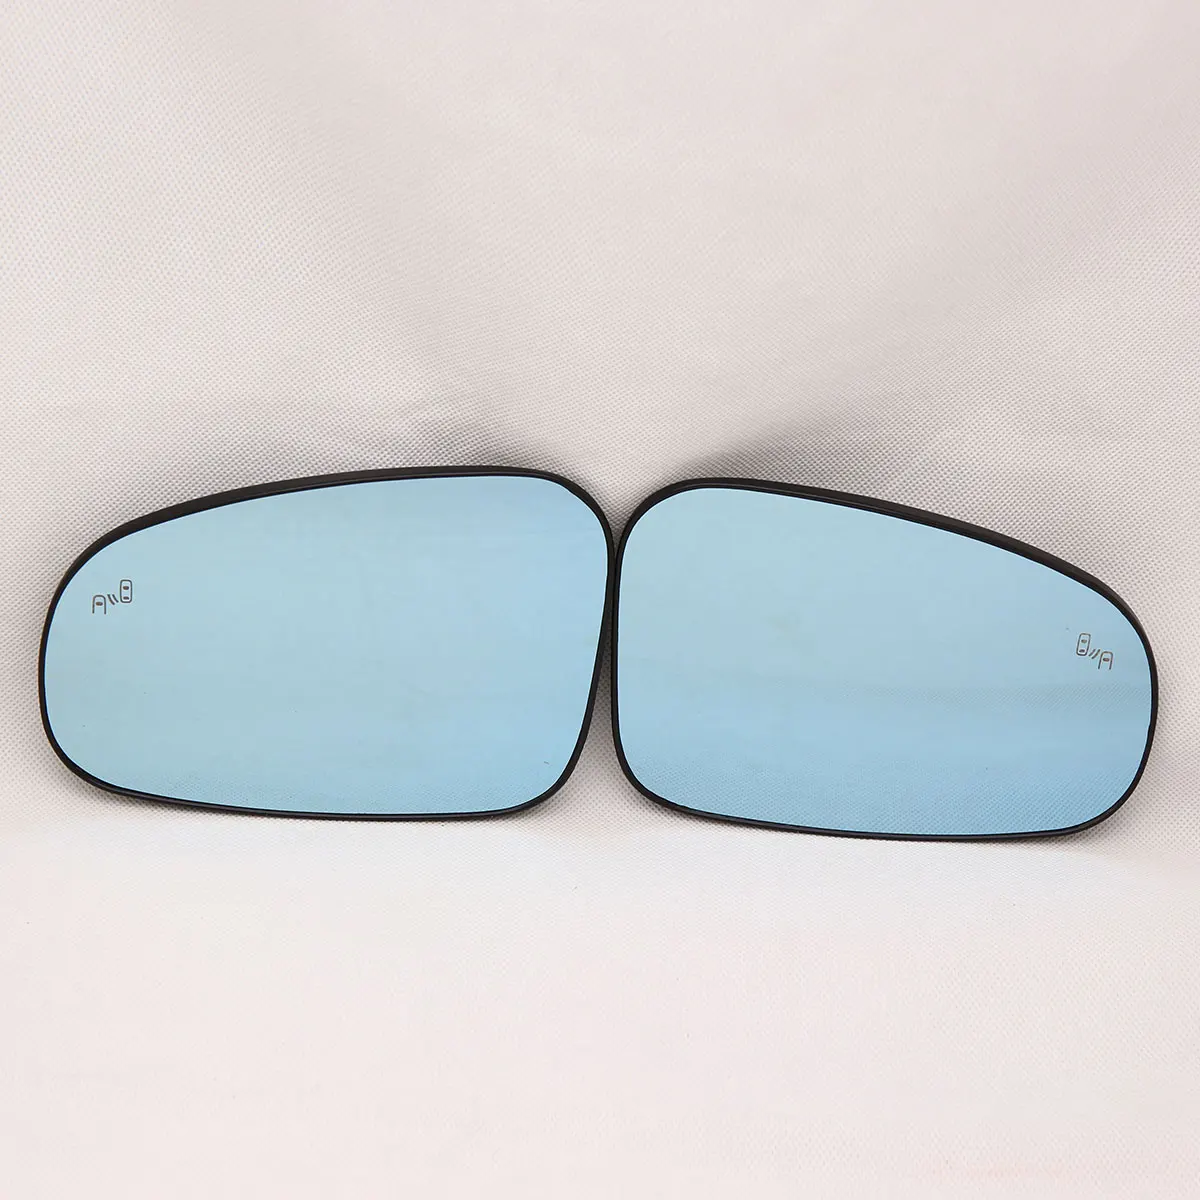 Espejo azul del lado del coche espejo retrovisor luz prueba espejo retrovisor térmico BSM emblema para Toyota Prius 2011-2014